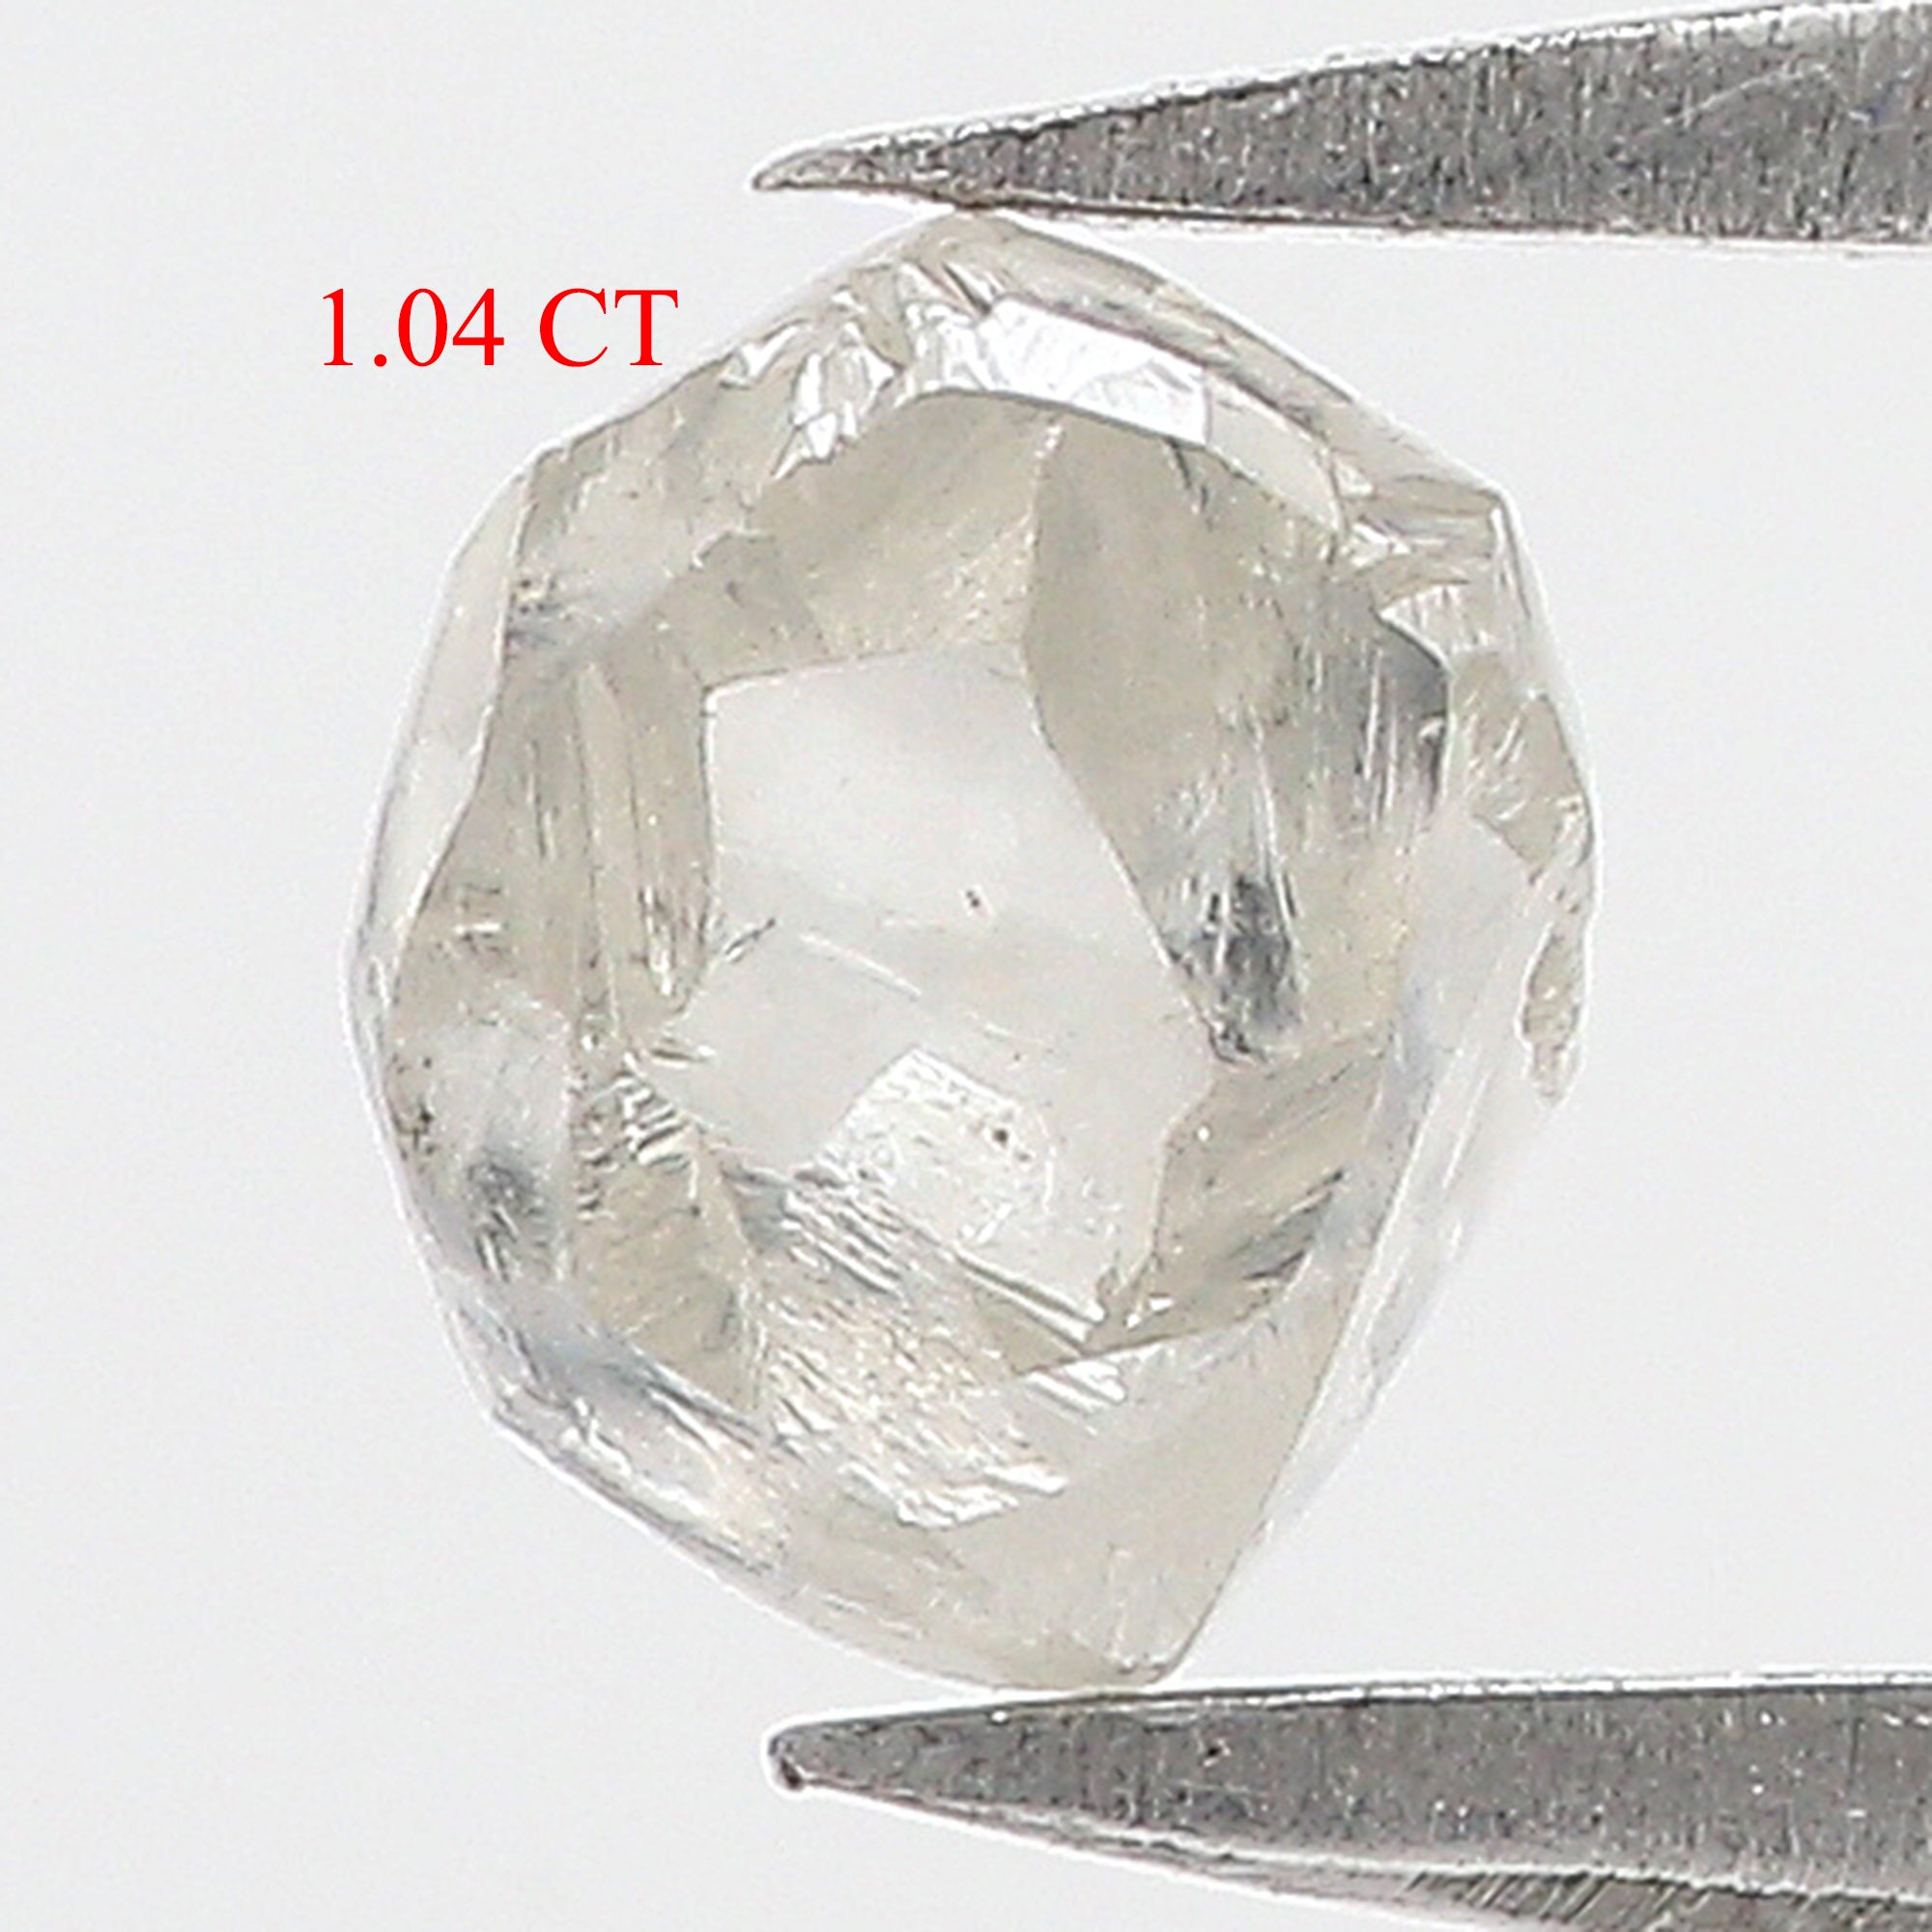 1.04 CT Natural Loose Rough Shape Diamond Milky White Color Rough Diamond 5.70 MM Natural Loose Diamond Rough Irregular Cut Diamond QL3115